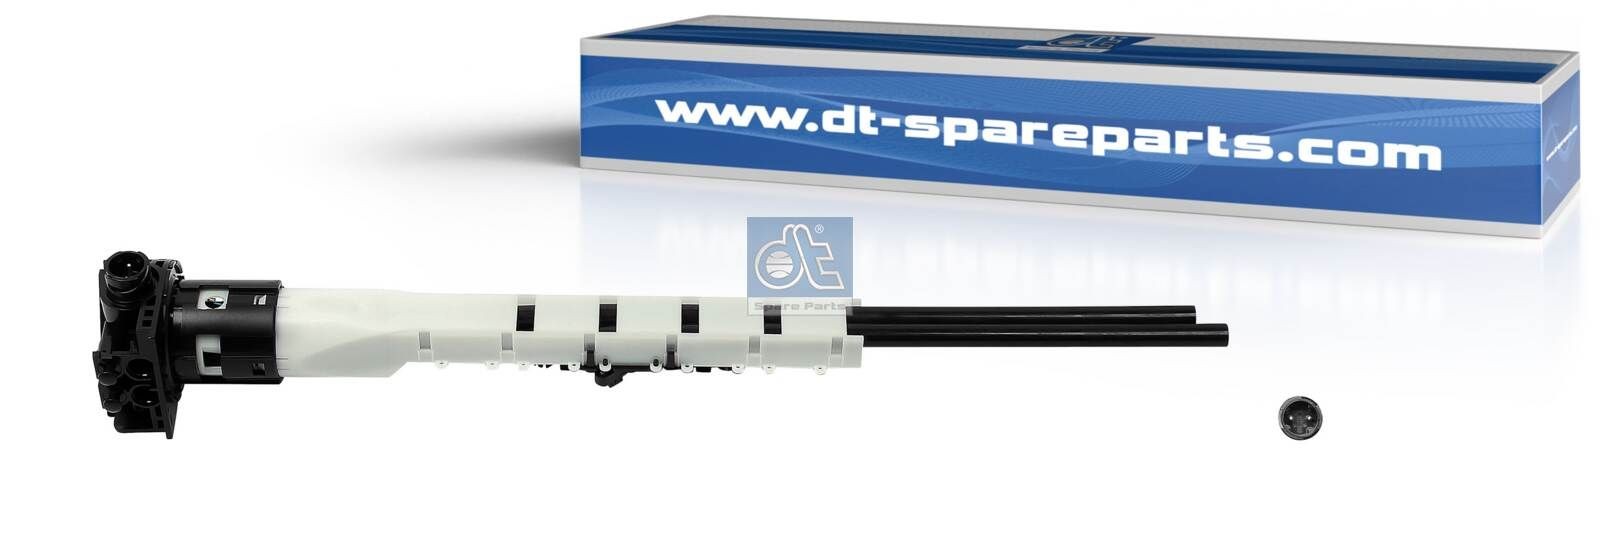 463254 Fuel level sensor DT Spare Parts 4.63254 review and test